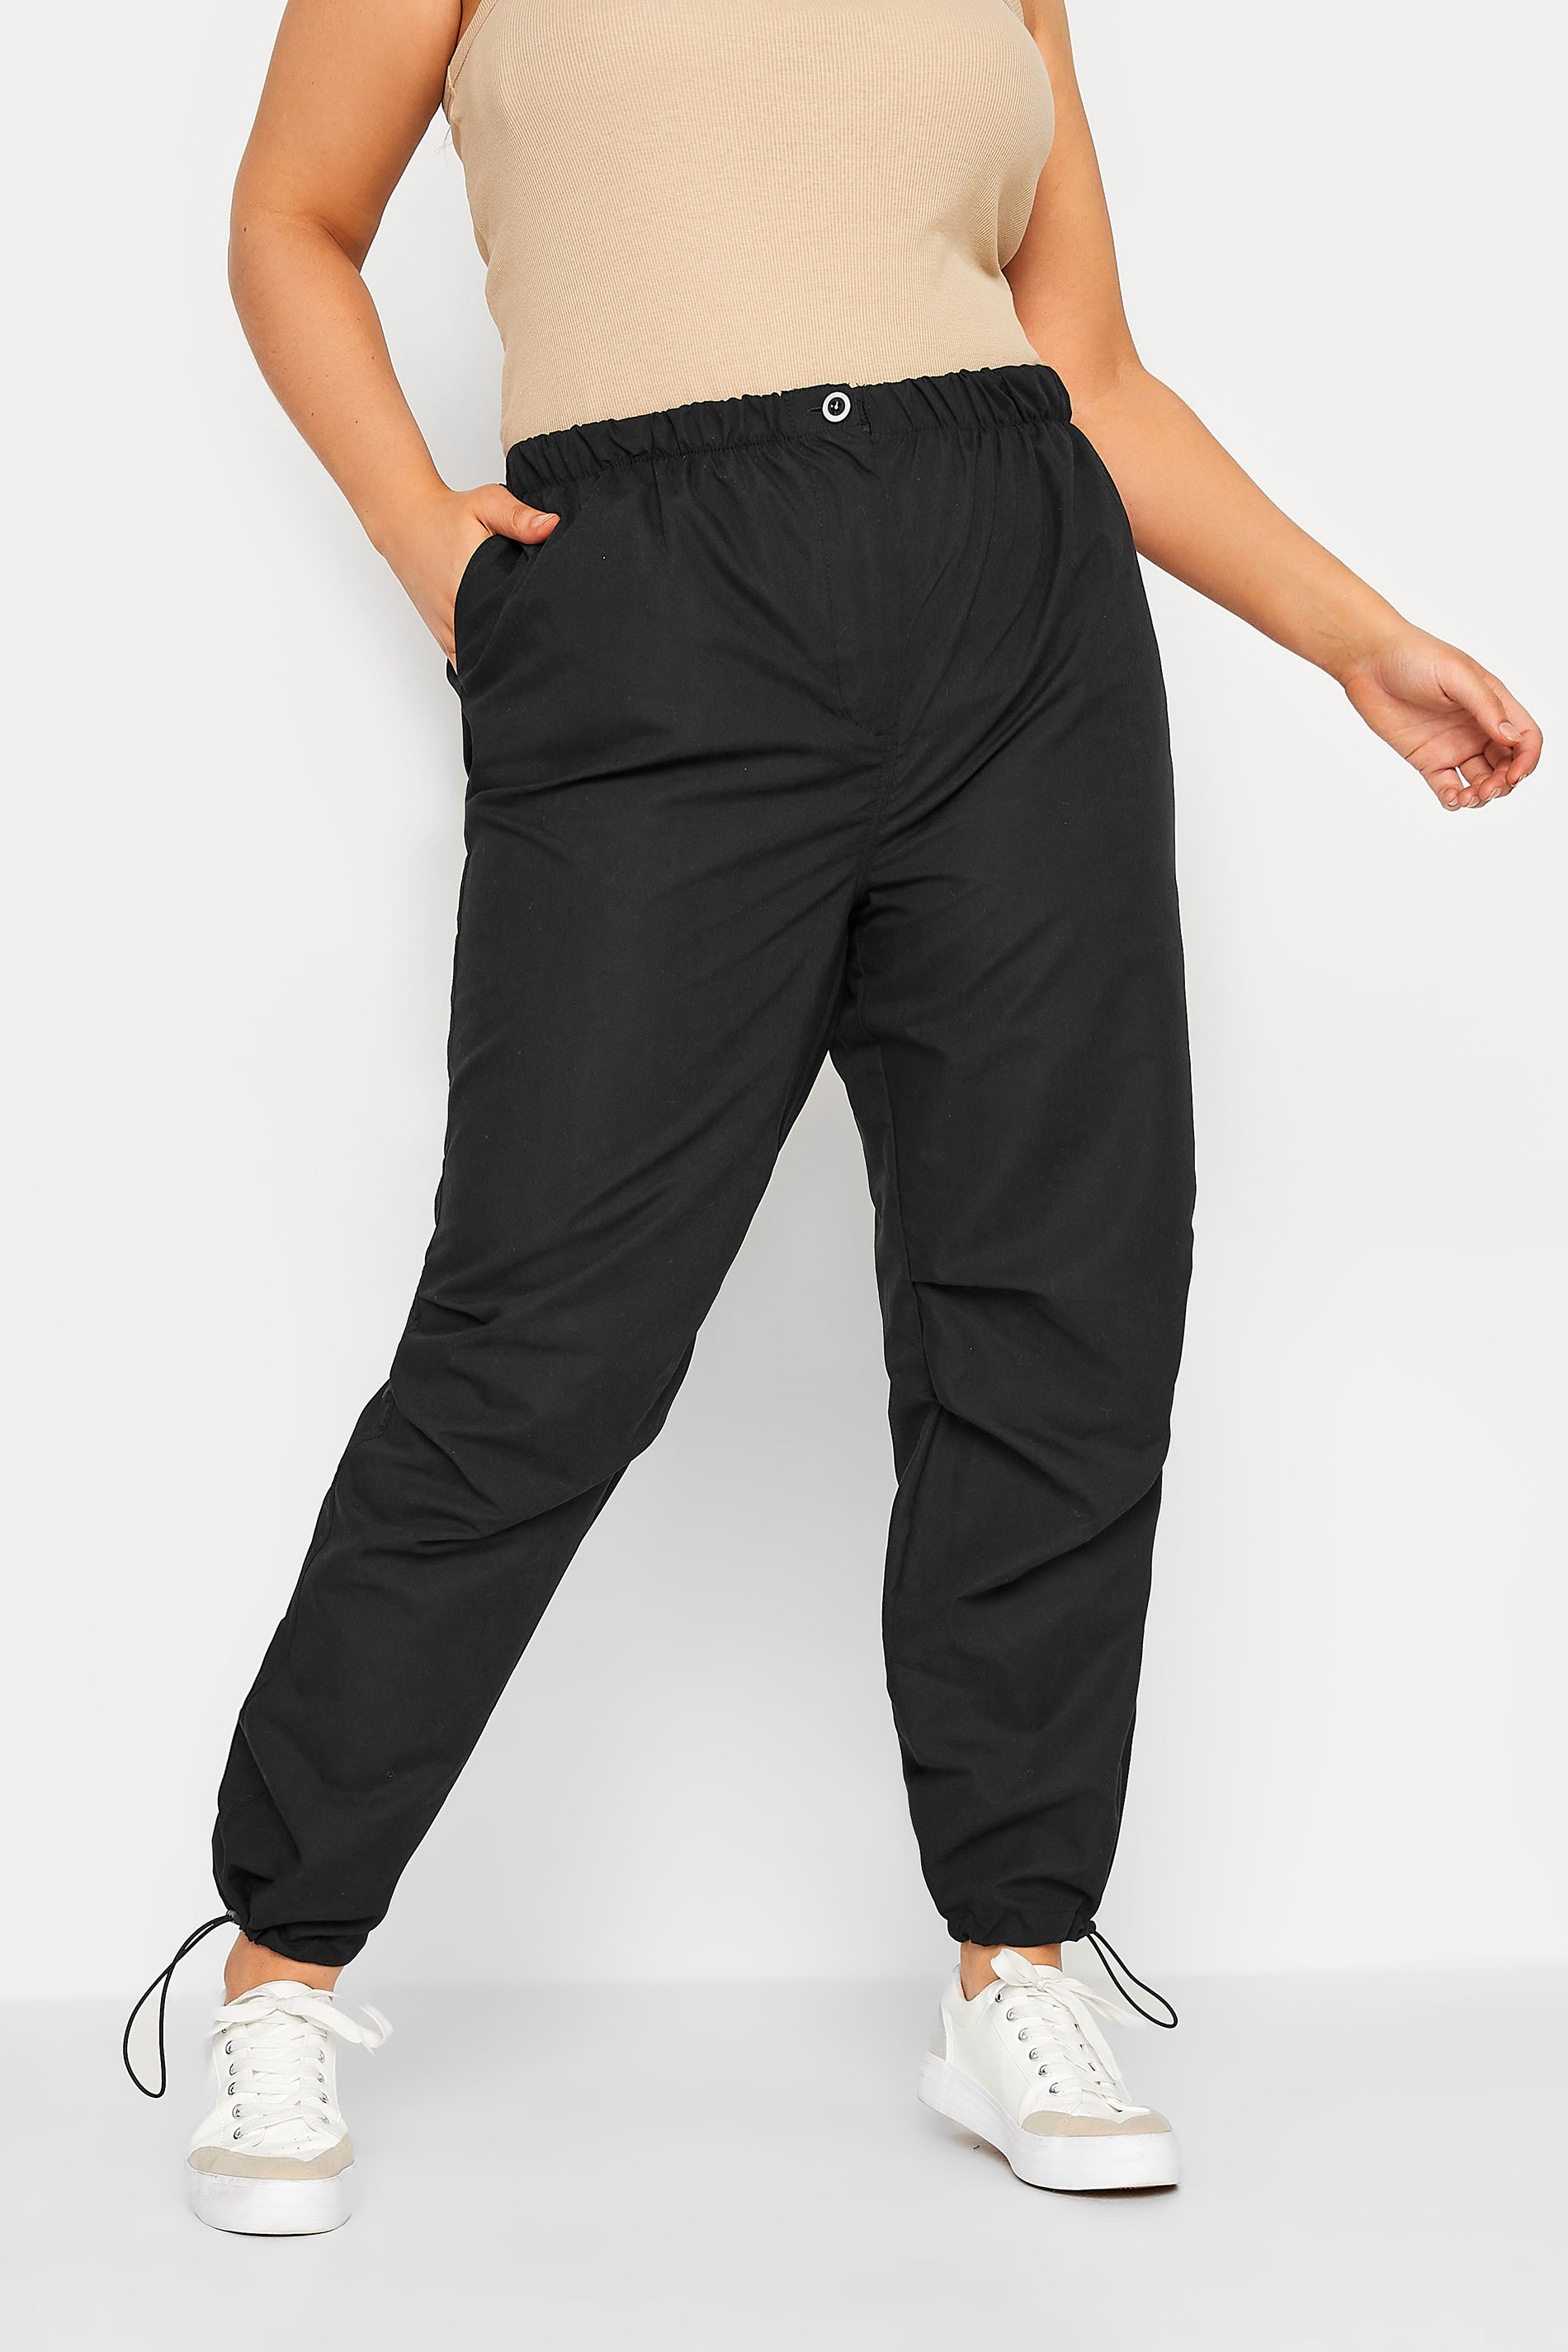 YOURS Curve Plus Size Black Parachute Trousers | Yours Clothing  1